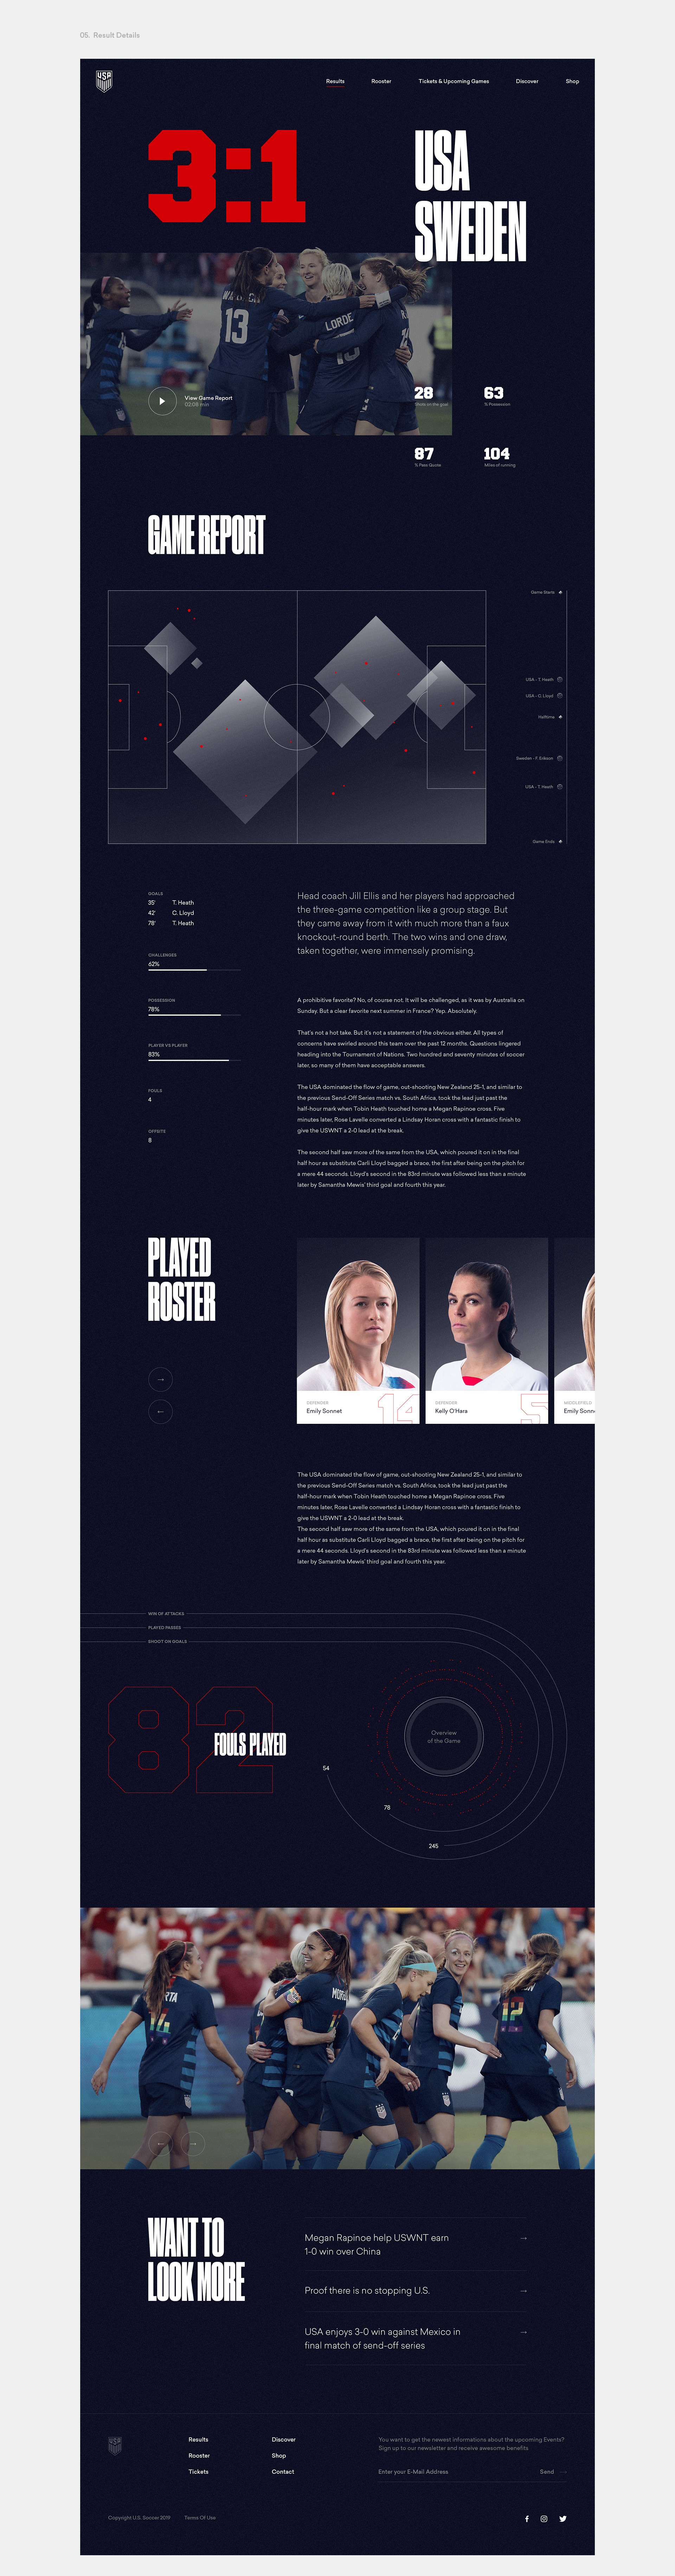 U.S. Women's National Soccer Team Web Design Concept